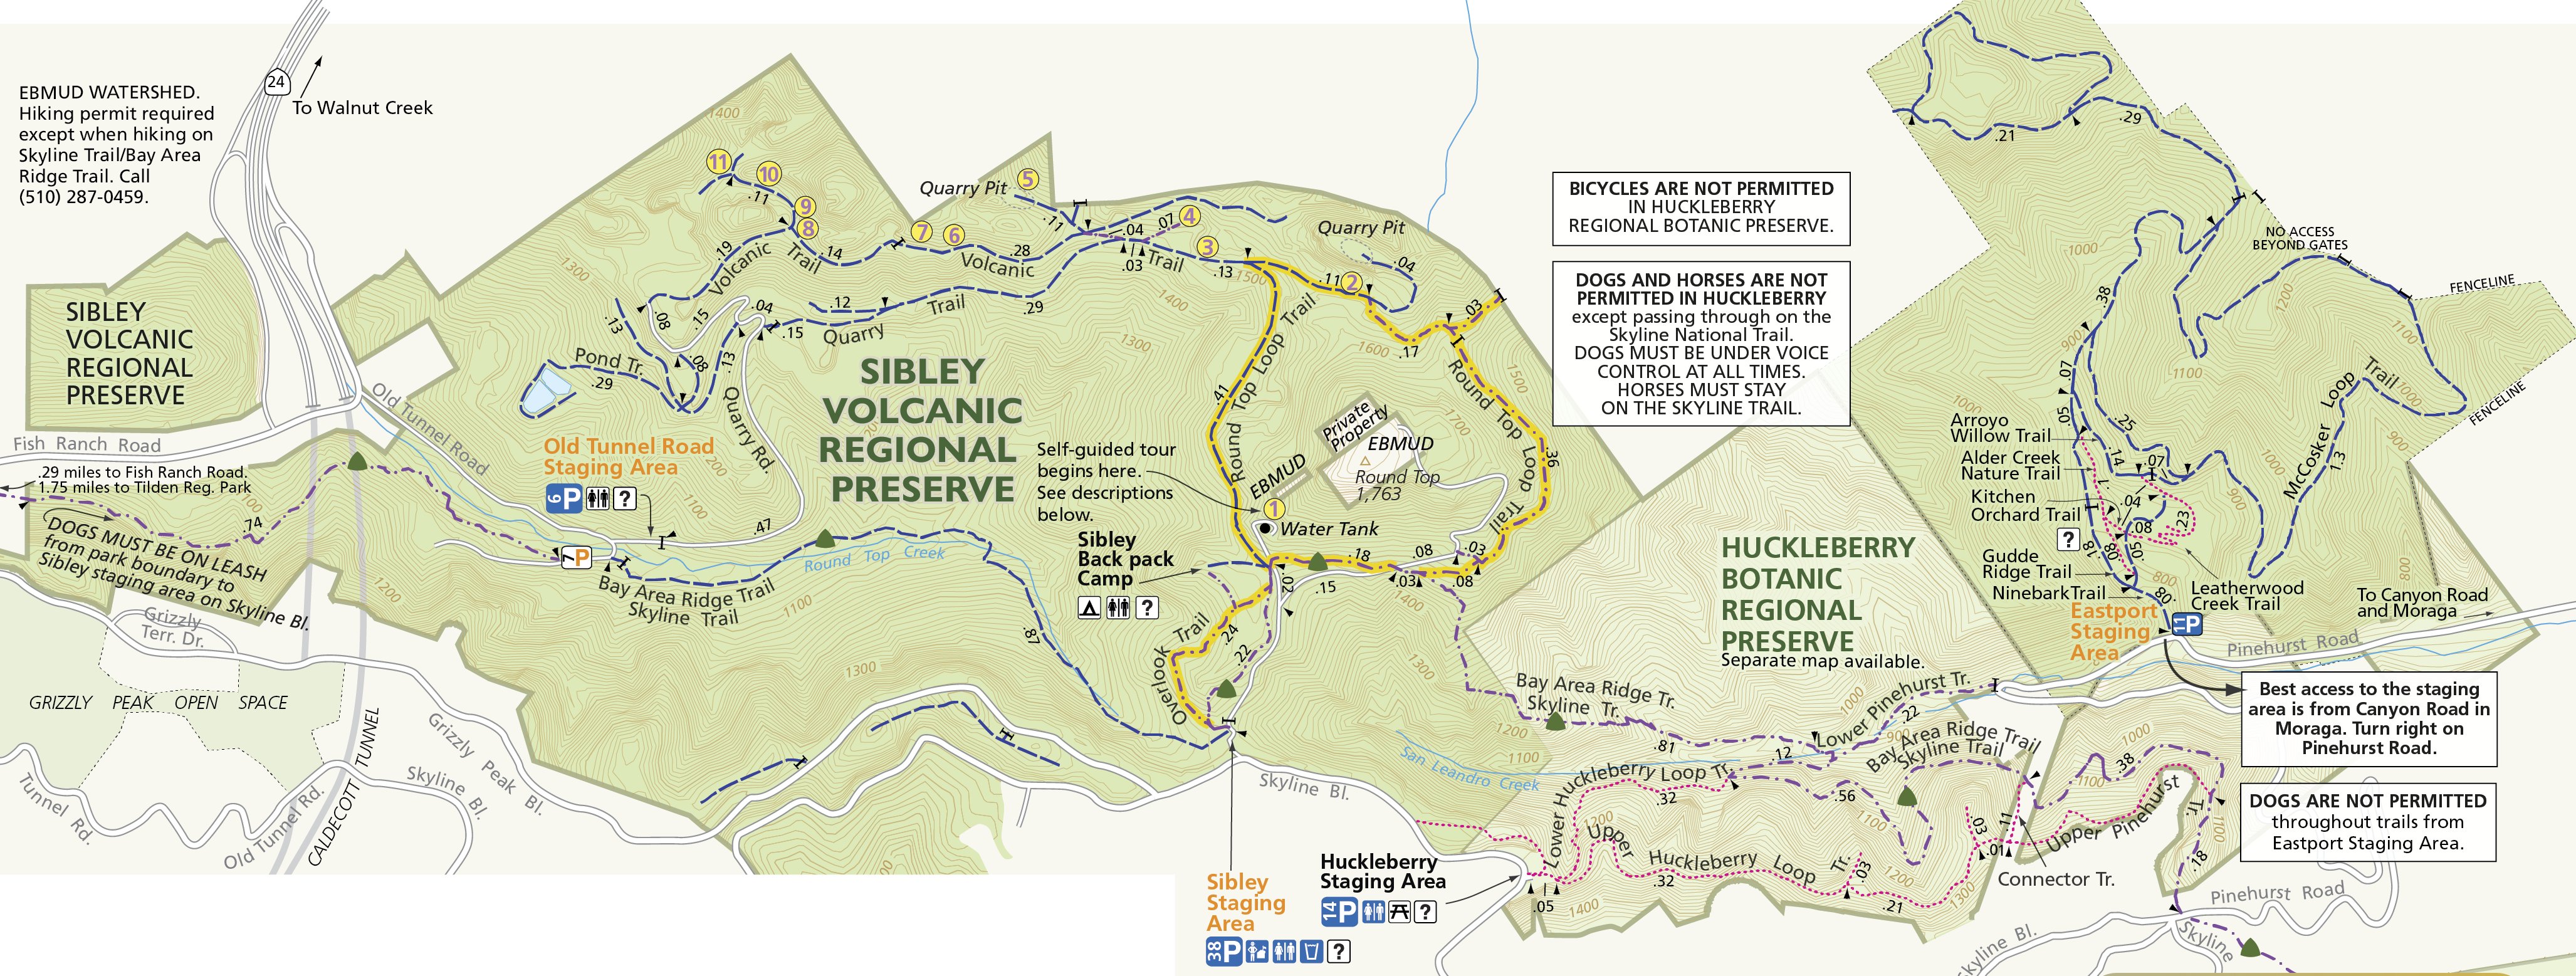 Map of Sibley Volcanic Regional Preserve